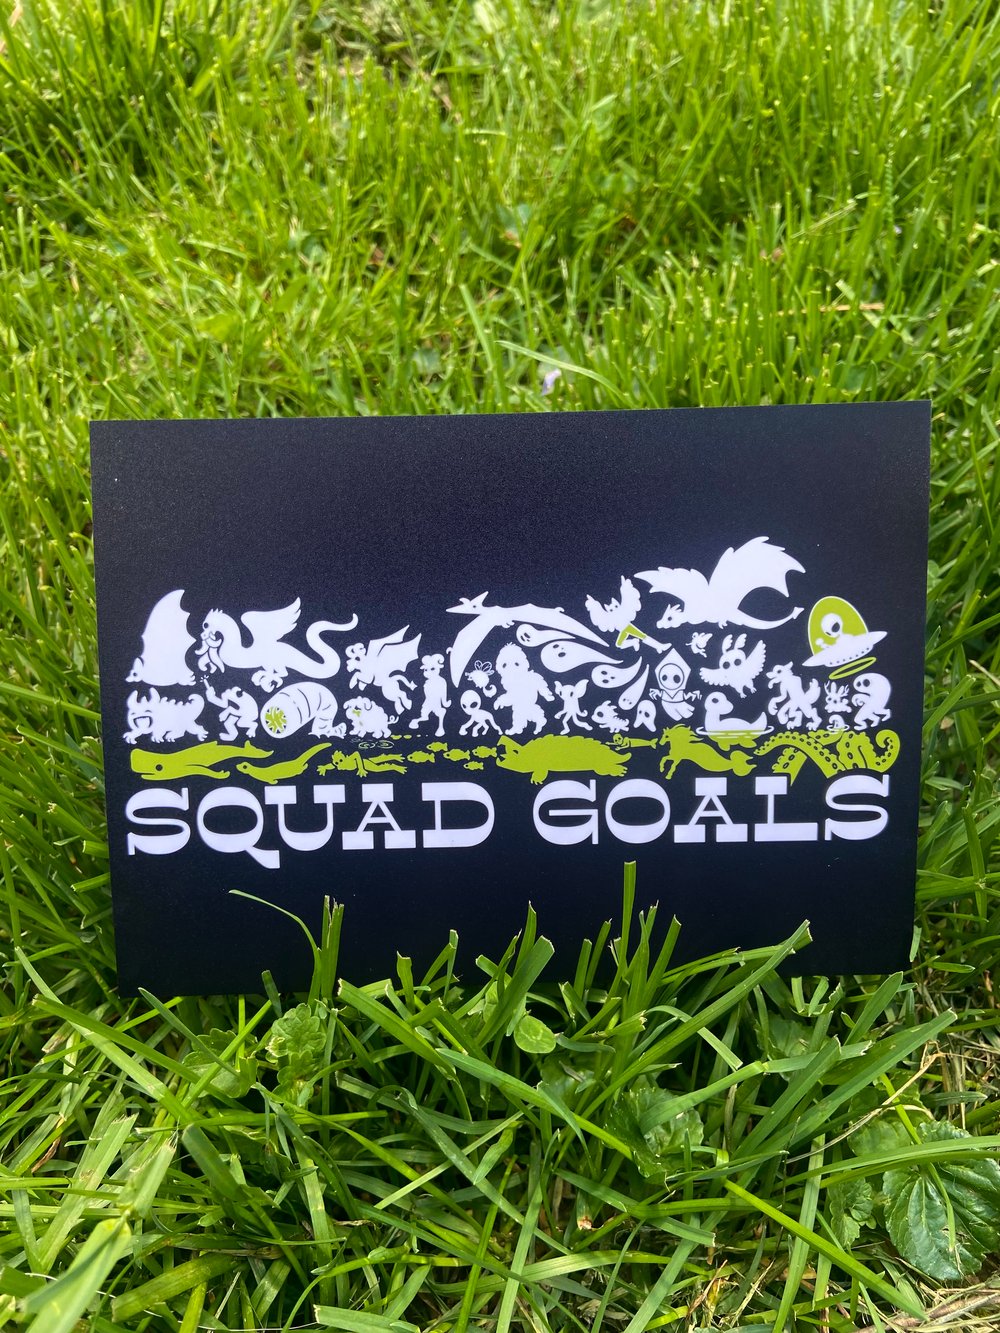 Squad Goals Mini Print